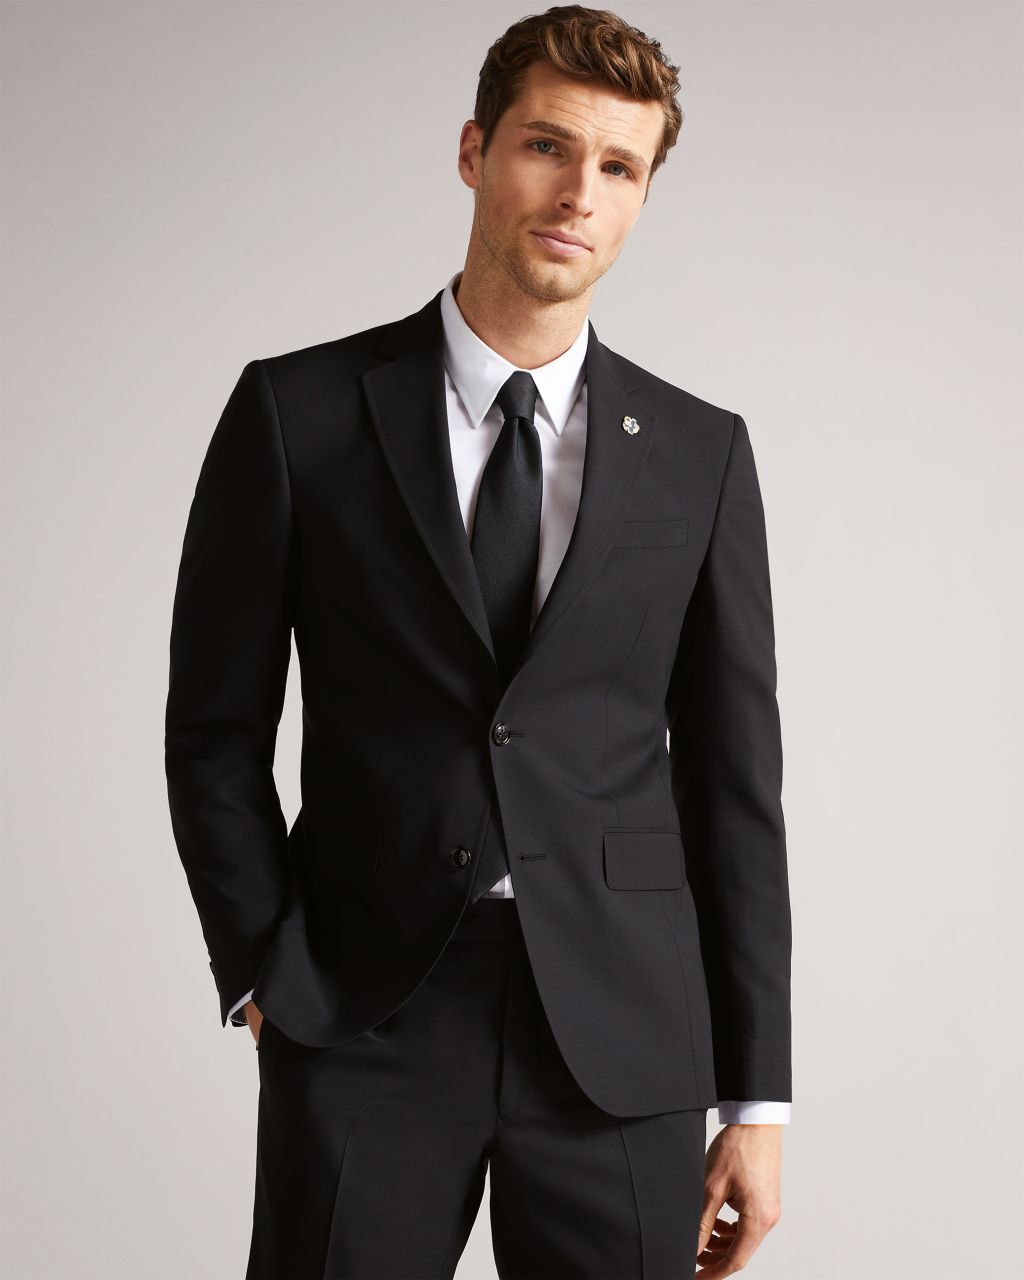 Ted Baker Men's Slim Fit Suit Jacket in Black, JVJacketbl, Wool